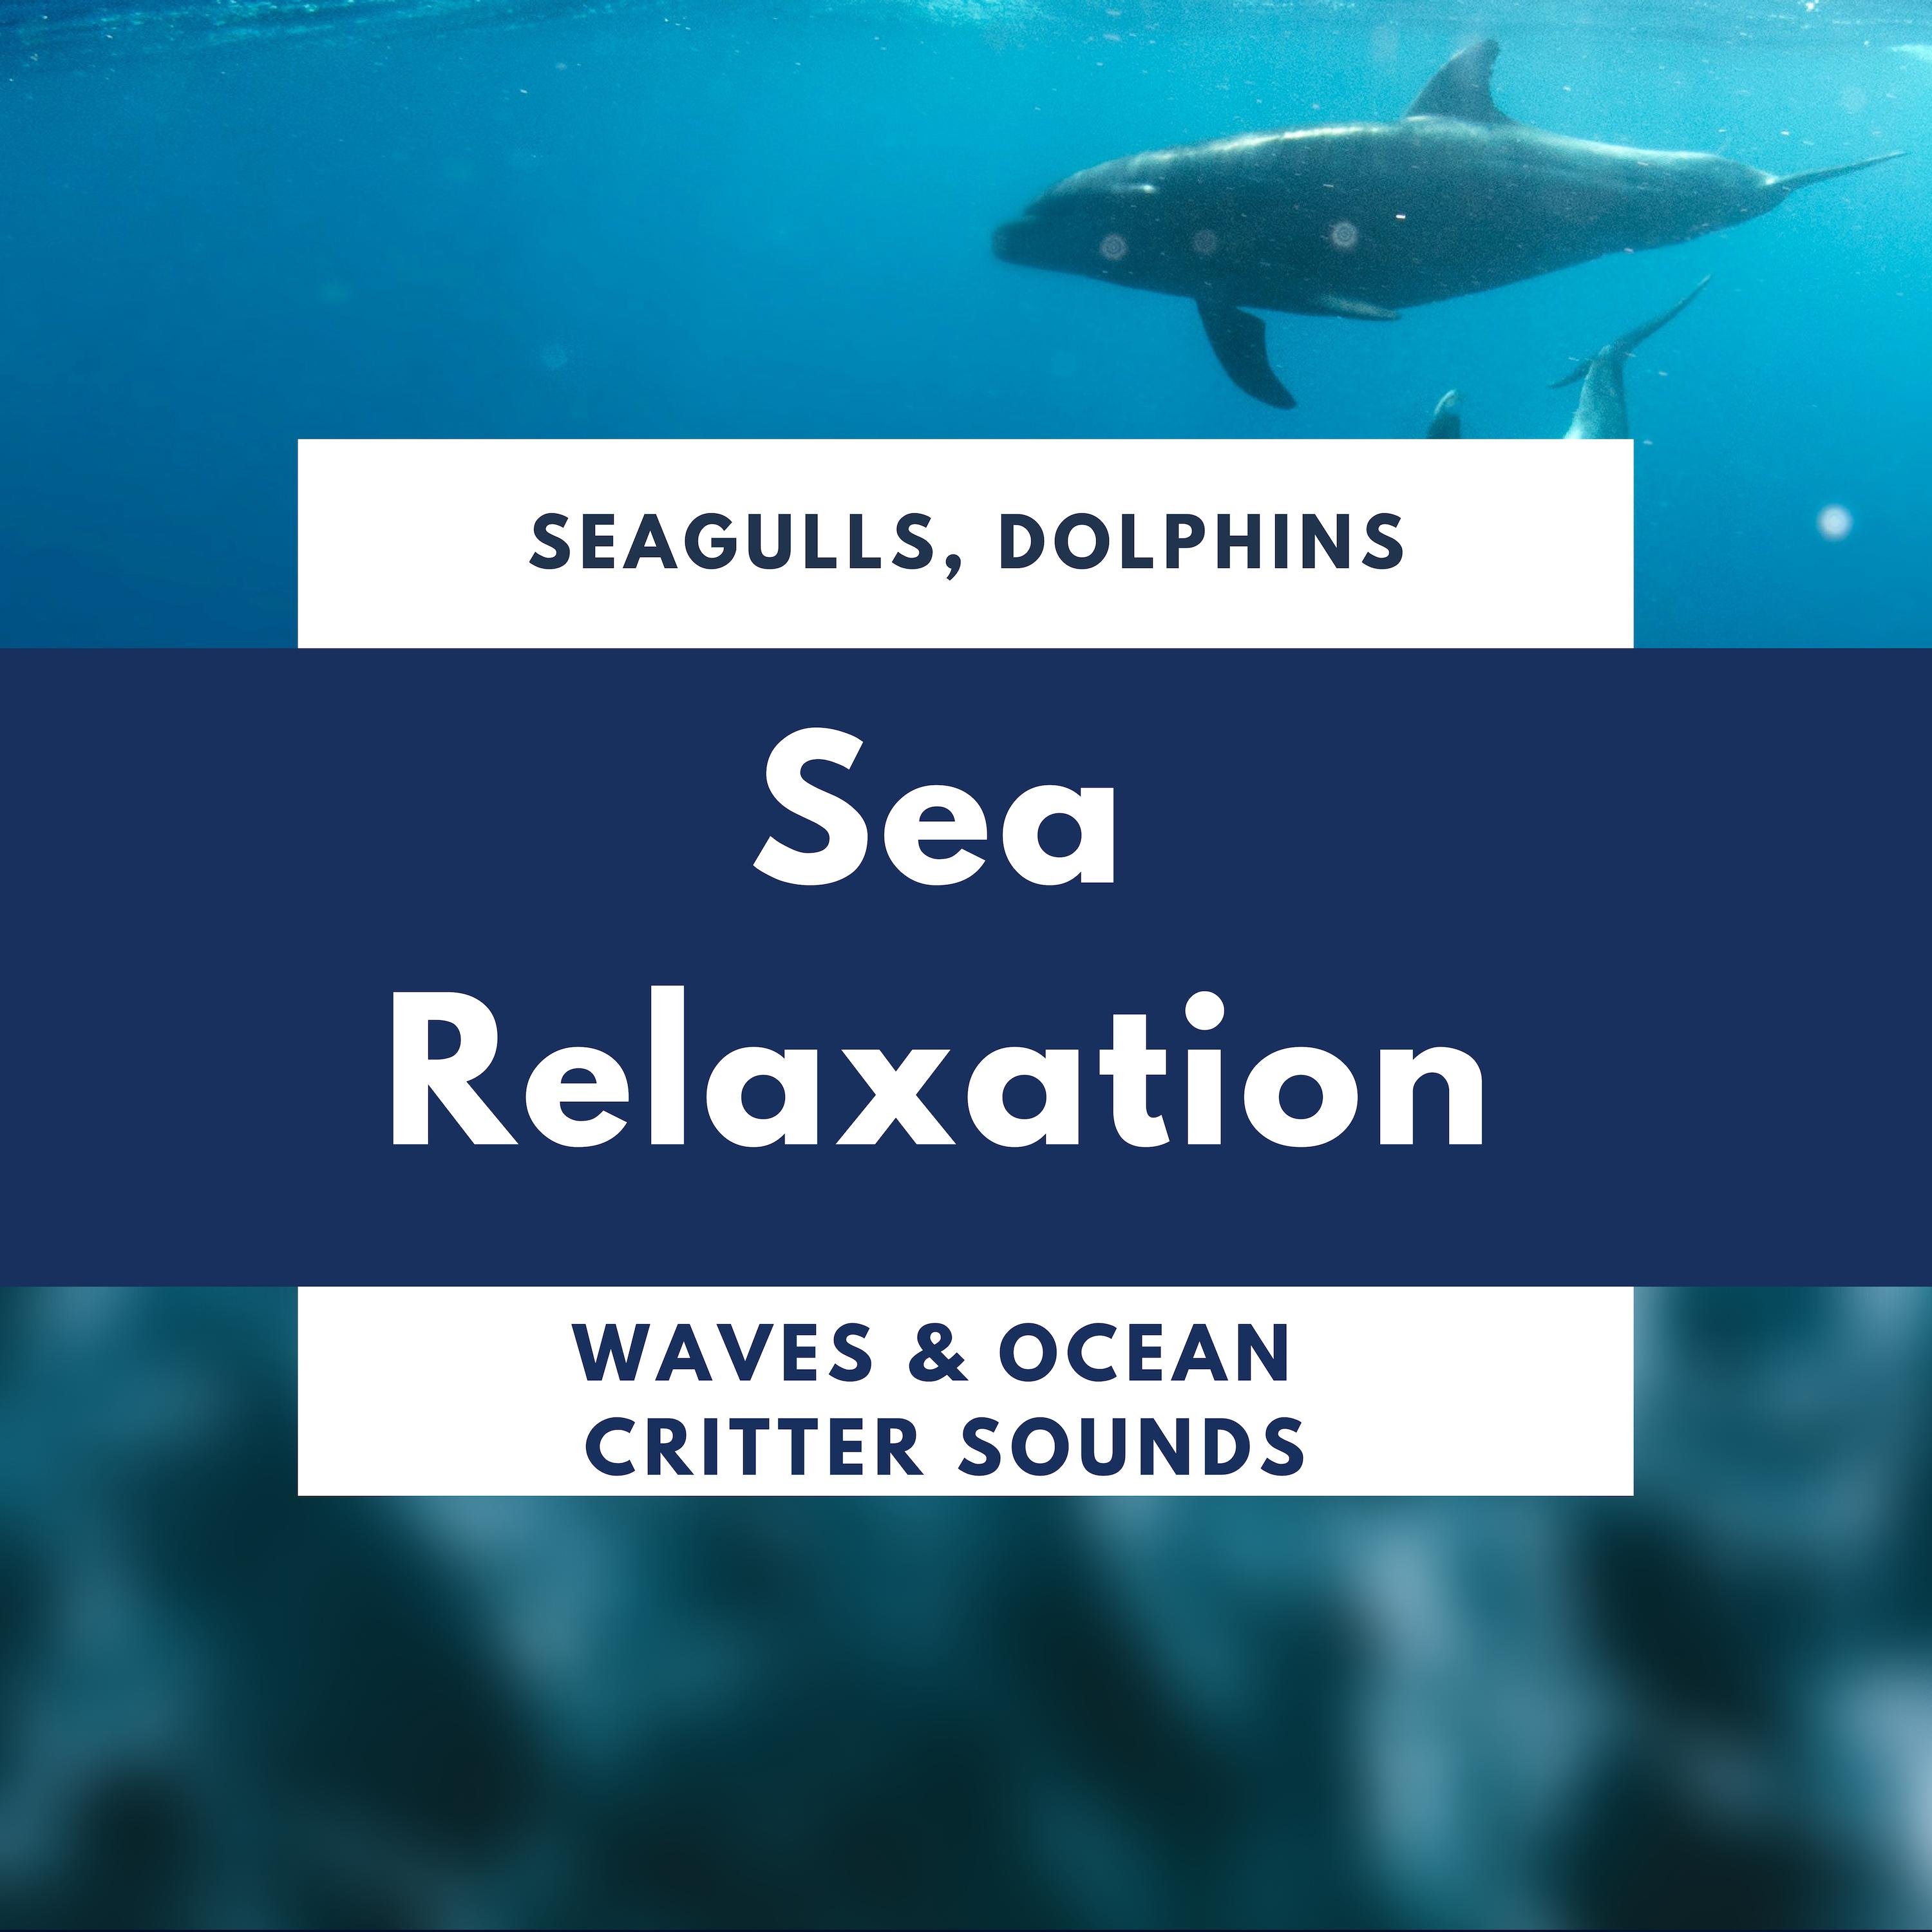 Sea Sounds